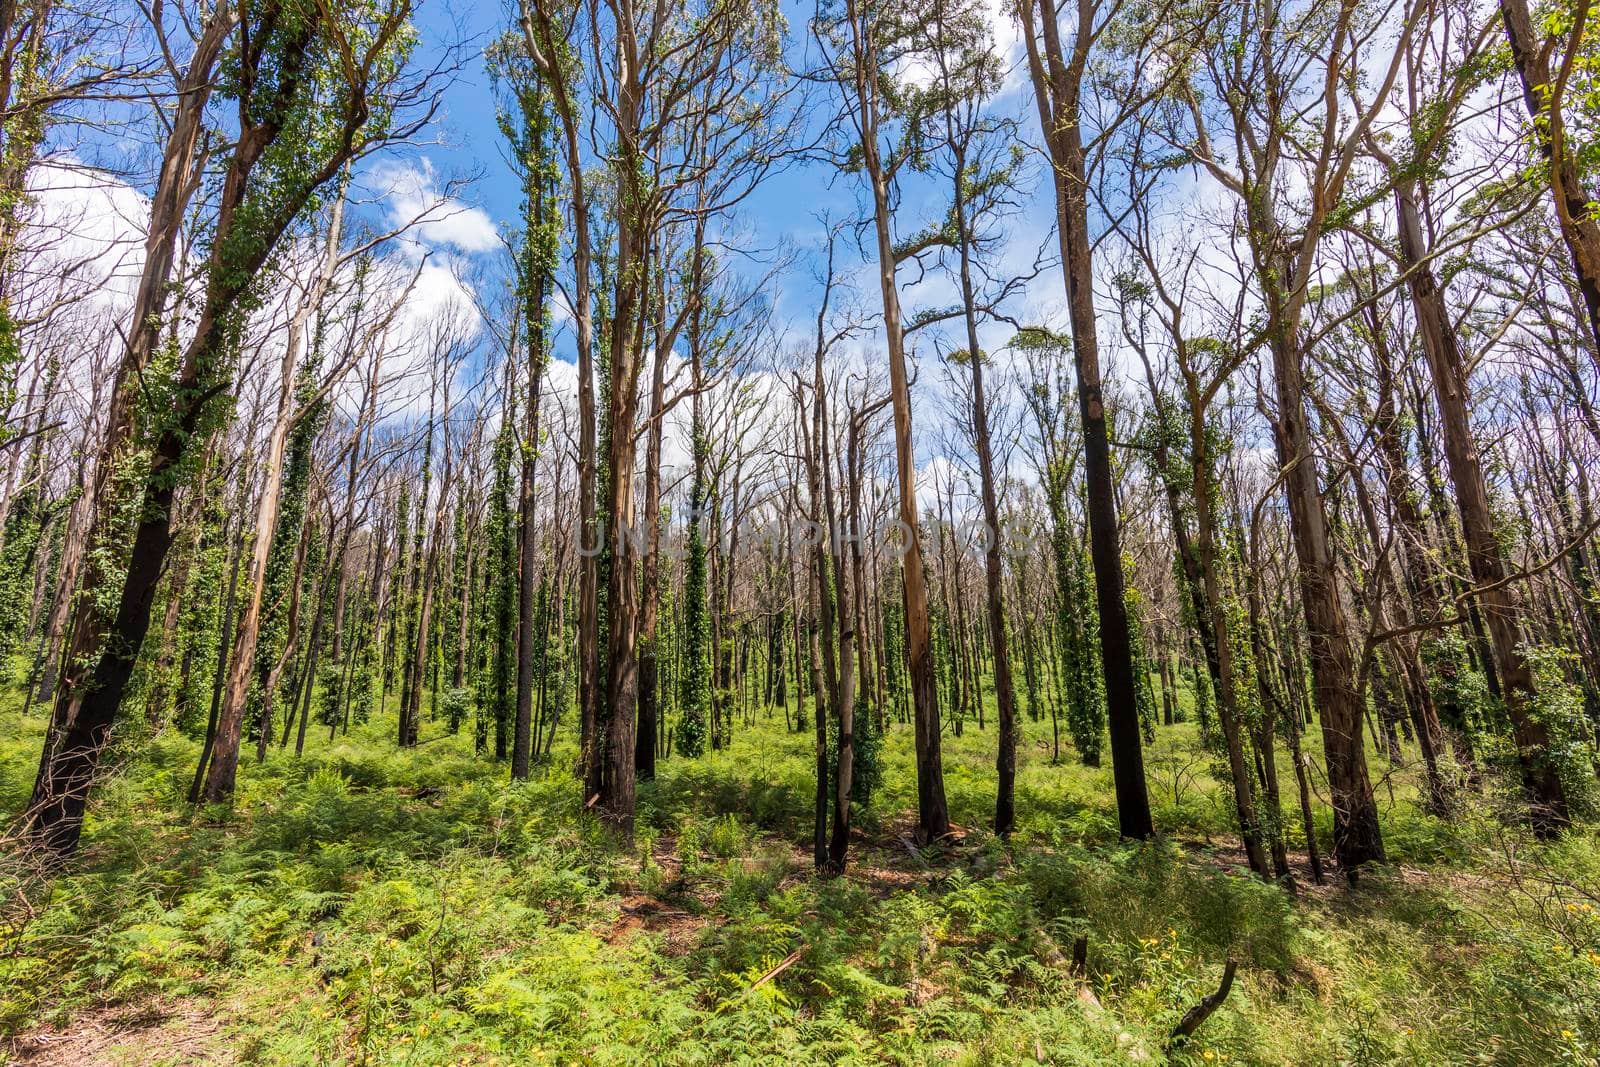 Forest regeneration after bushfire in Kanangra-Boyd National Park in regional Australia by WittkePhotos